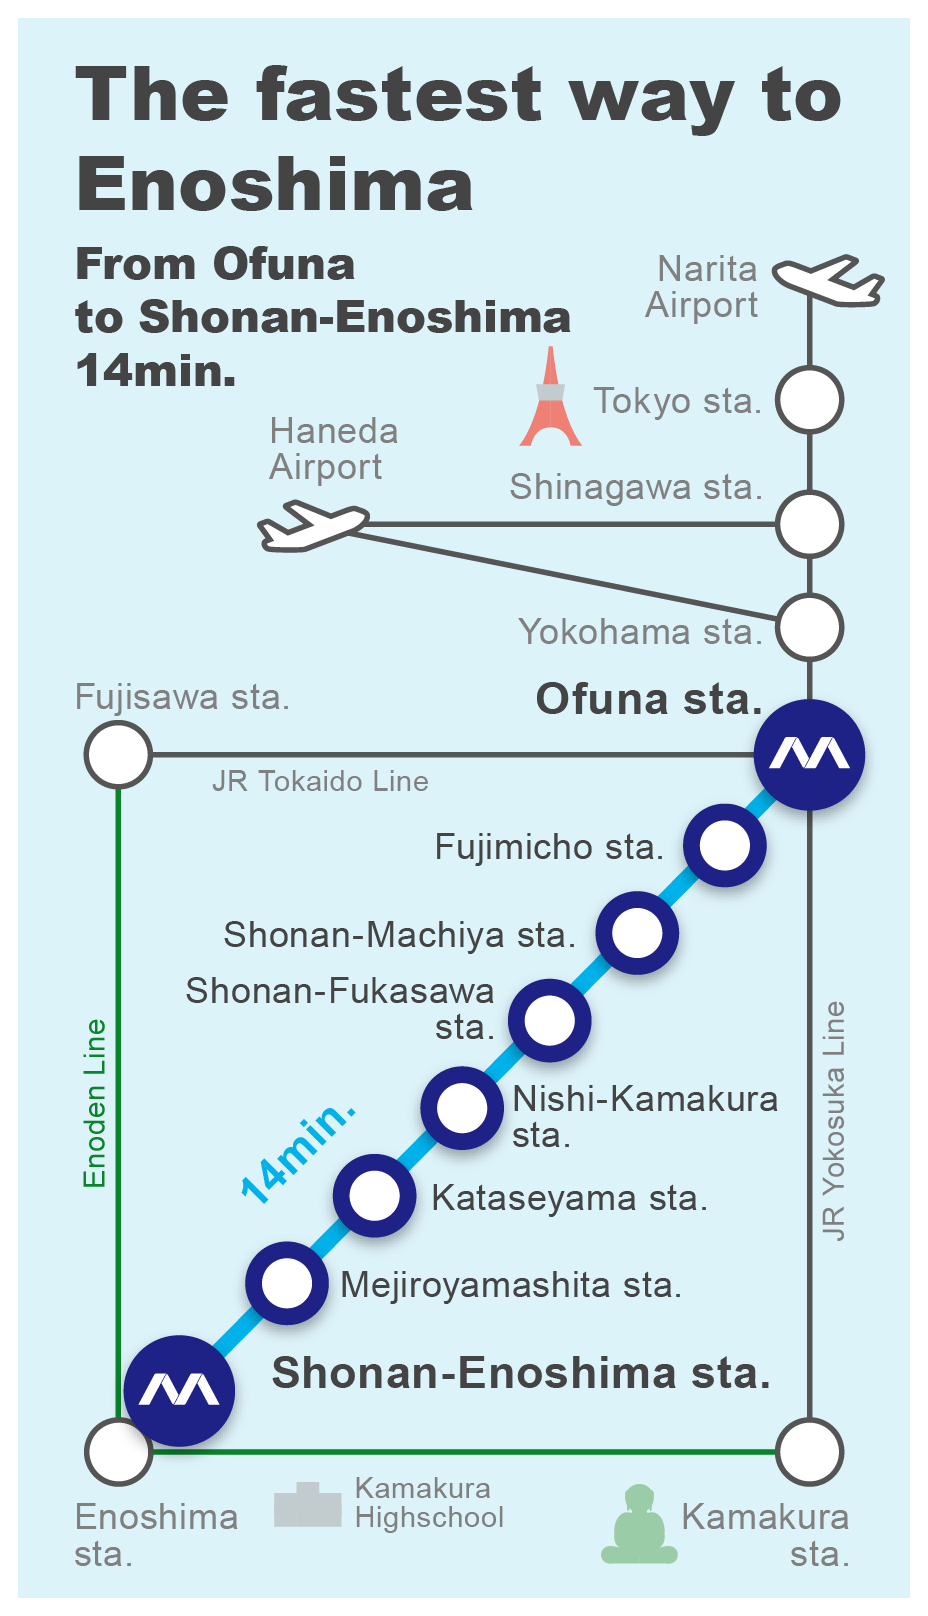 The fastest way to go Enoshima From Ofuna to Shonan-Enoshima 310Yen / 14min.